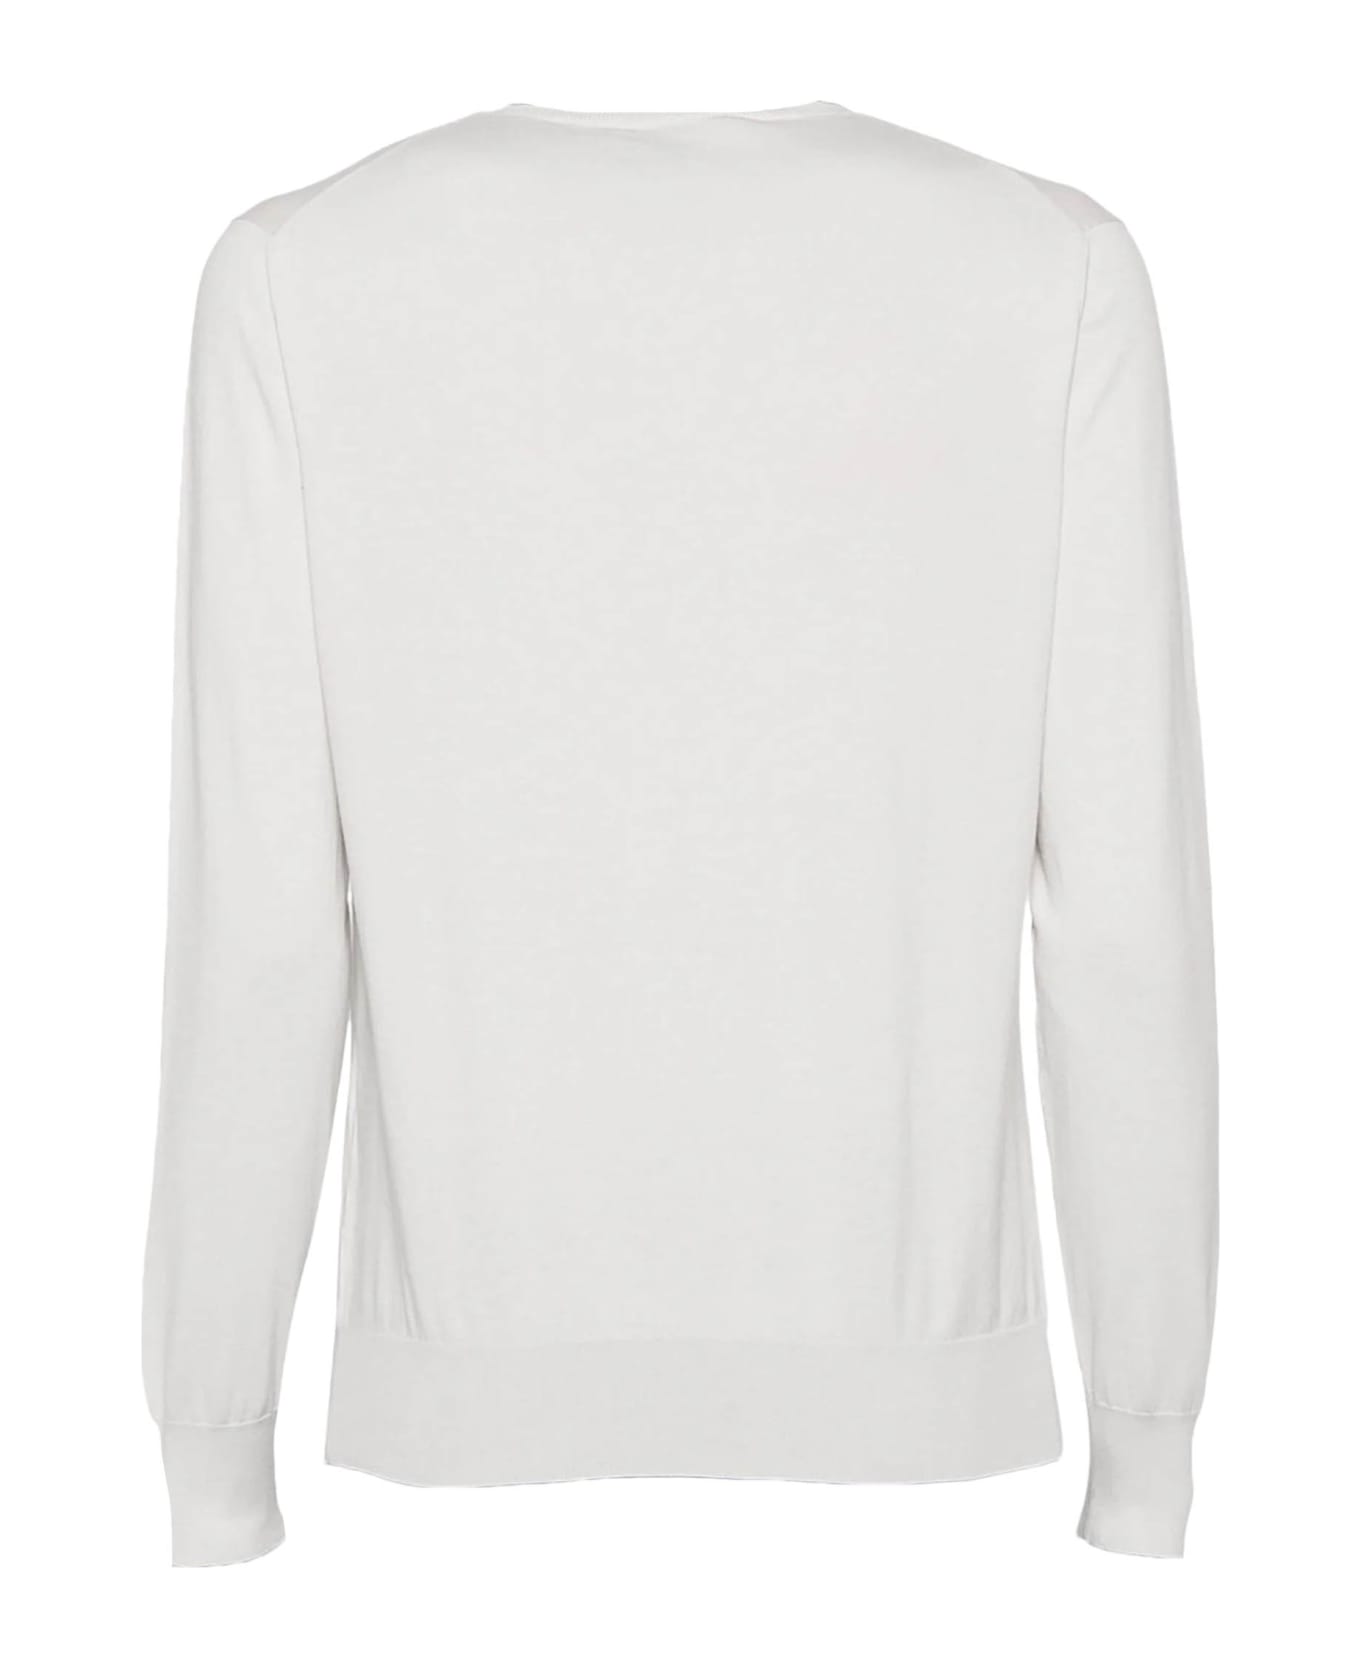 Cruciani Light Grey Cotton Sweater - Grey